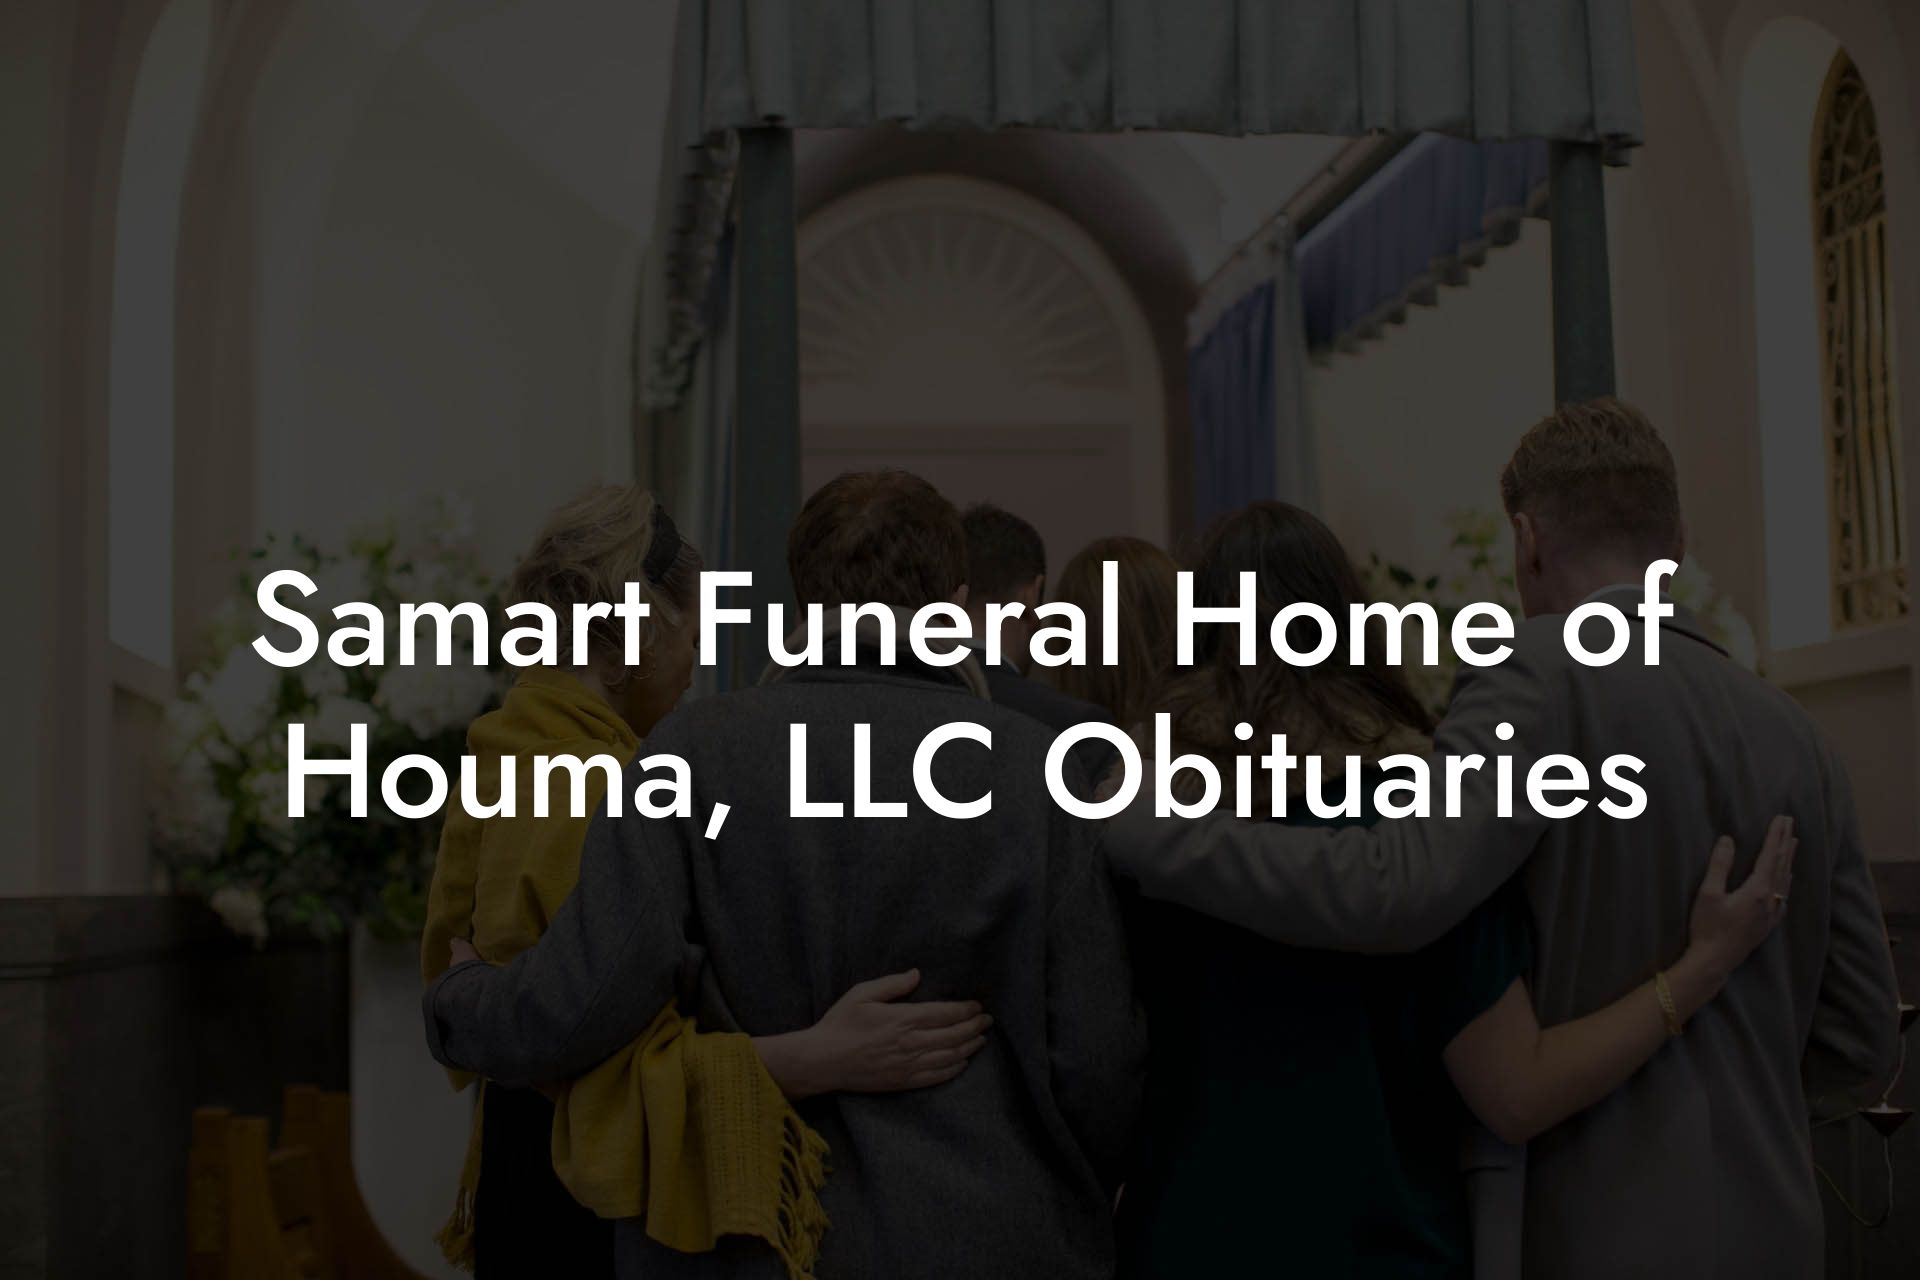 Samart Funeral Home of Houma, LLC Obituaries